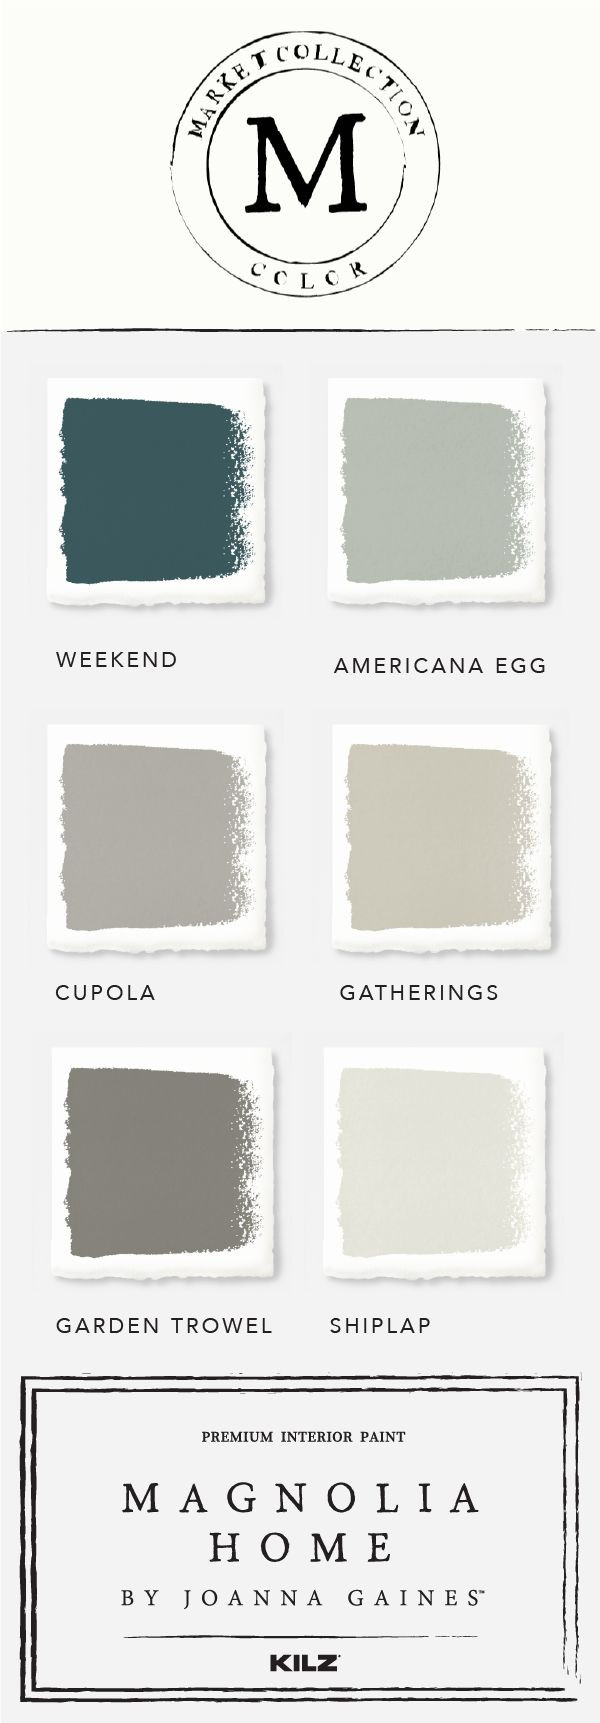 Best ideas about Magnolia Paint Colors
. Save or Pin 25 best ideas about Magnolia Home Decor on Pinterest Now.